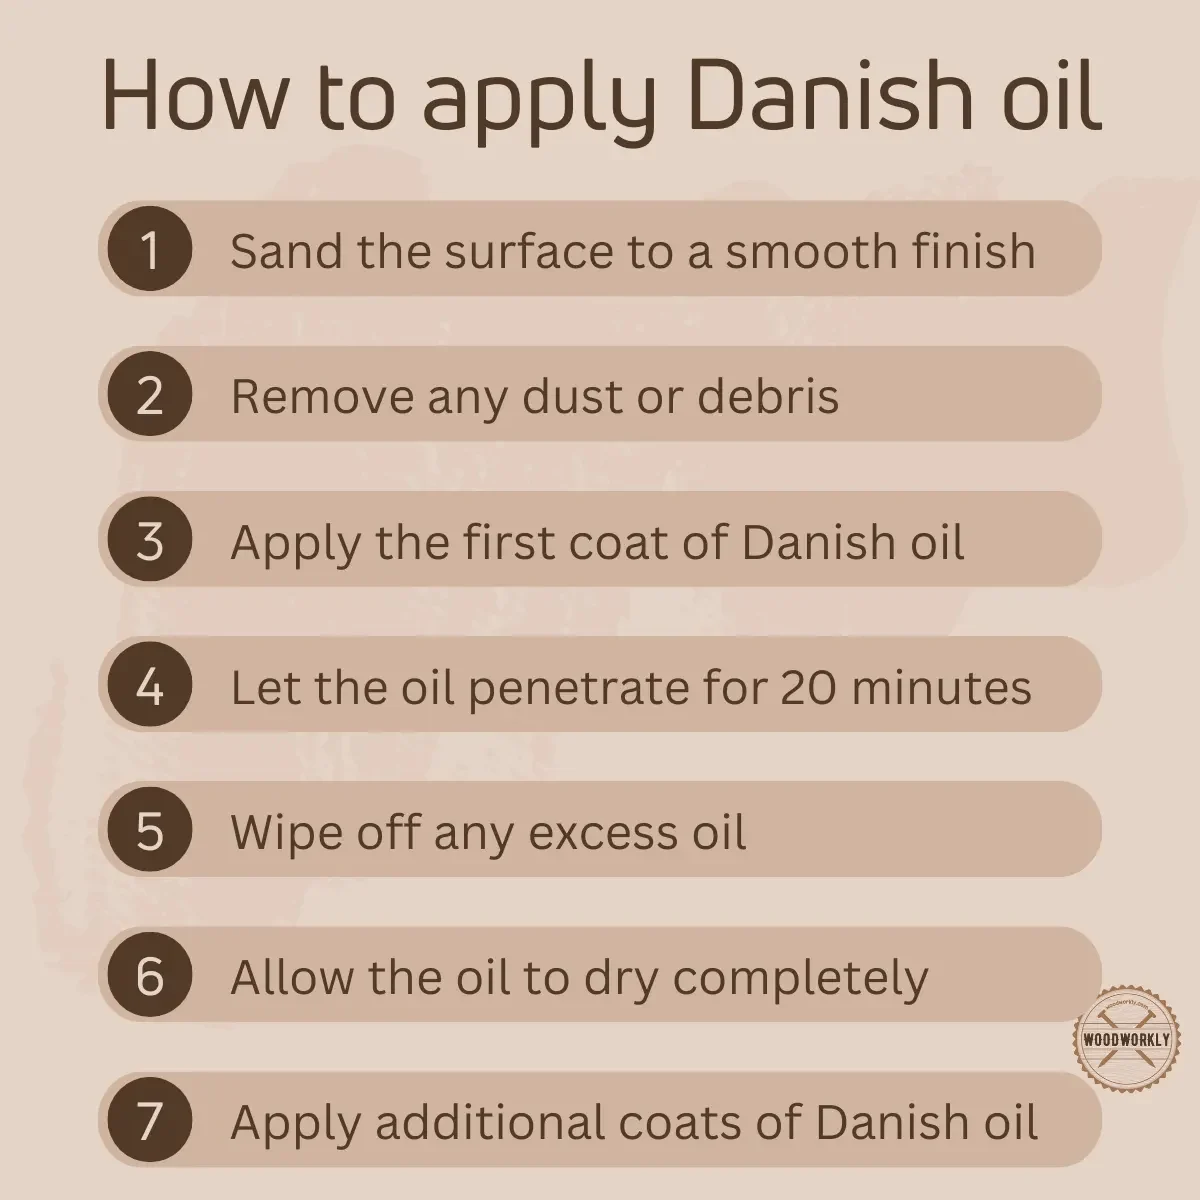 How to apply Danish oil